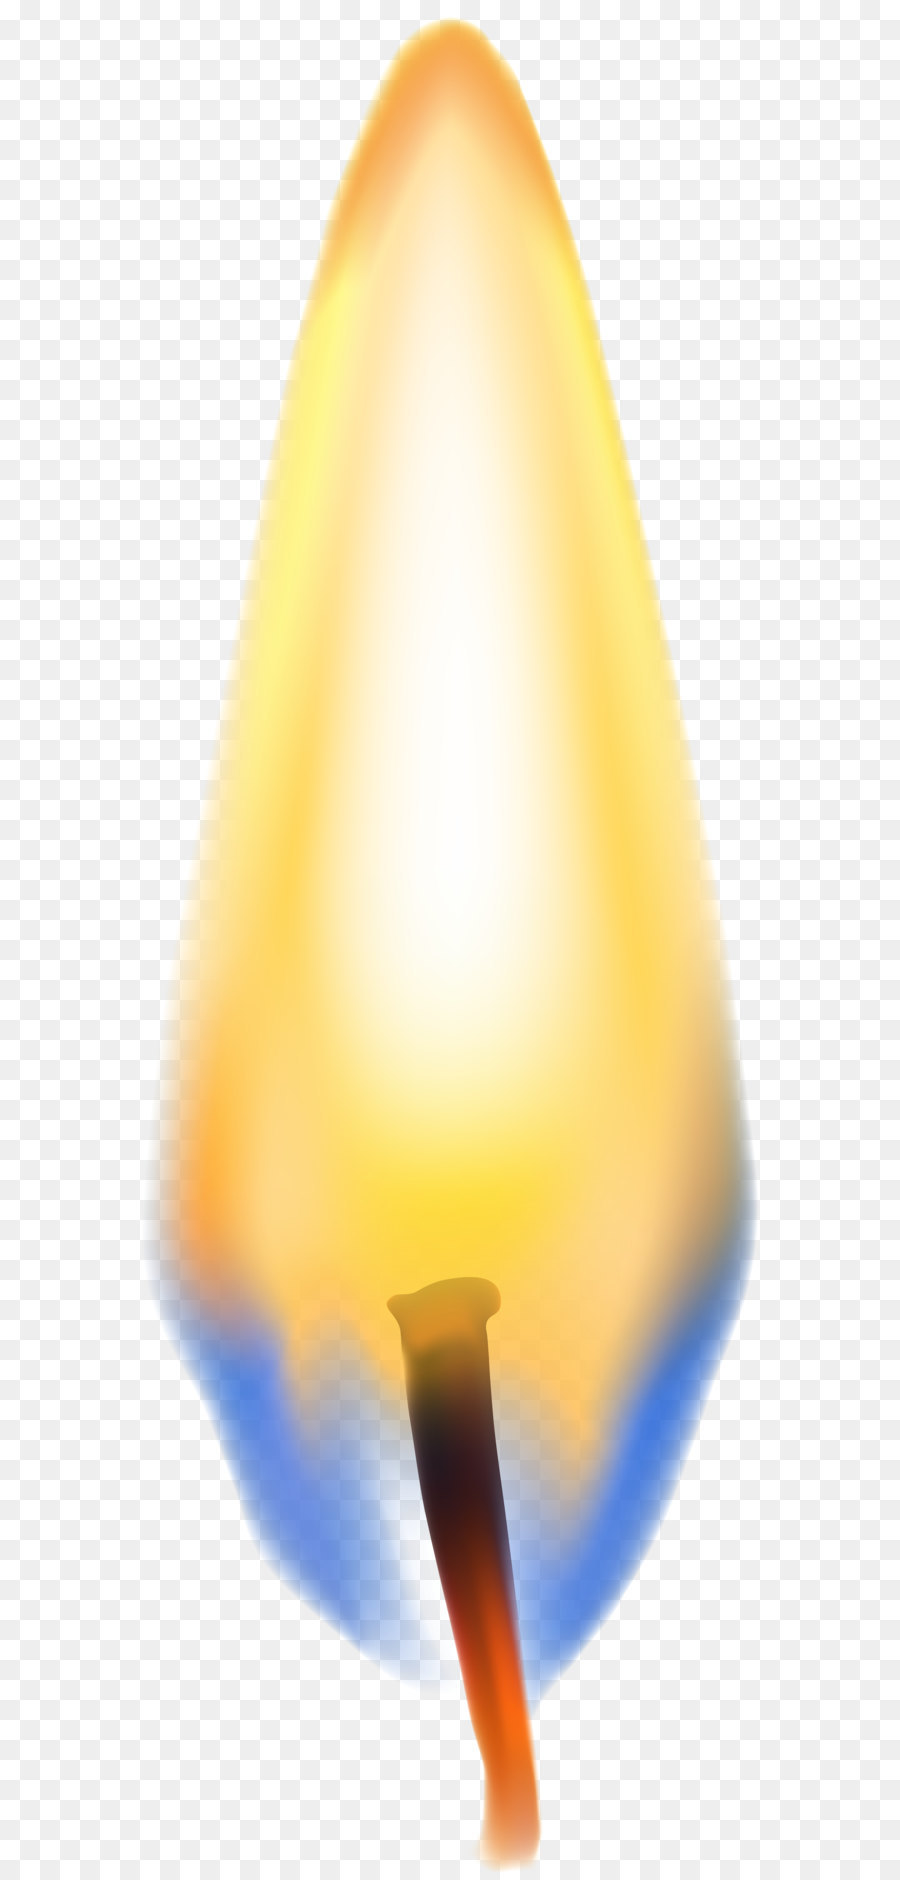 Design Product - Candle Flame Transparent PNG Clip Art Image png download - 2777*8000 - Free Transparent  png Download.